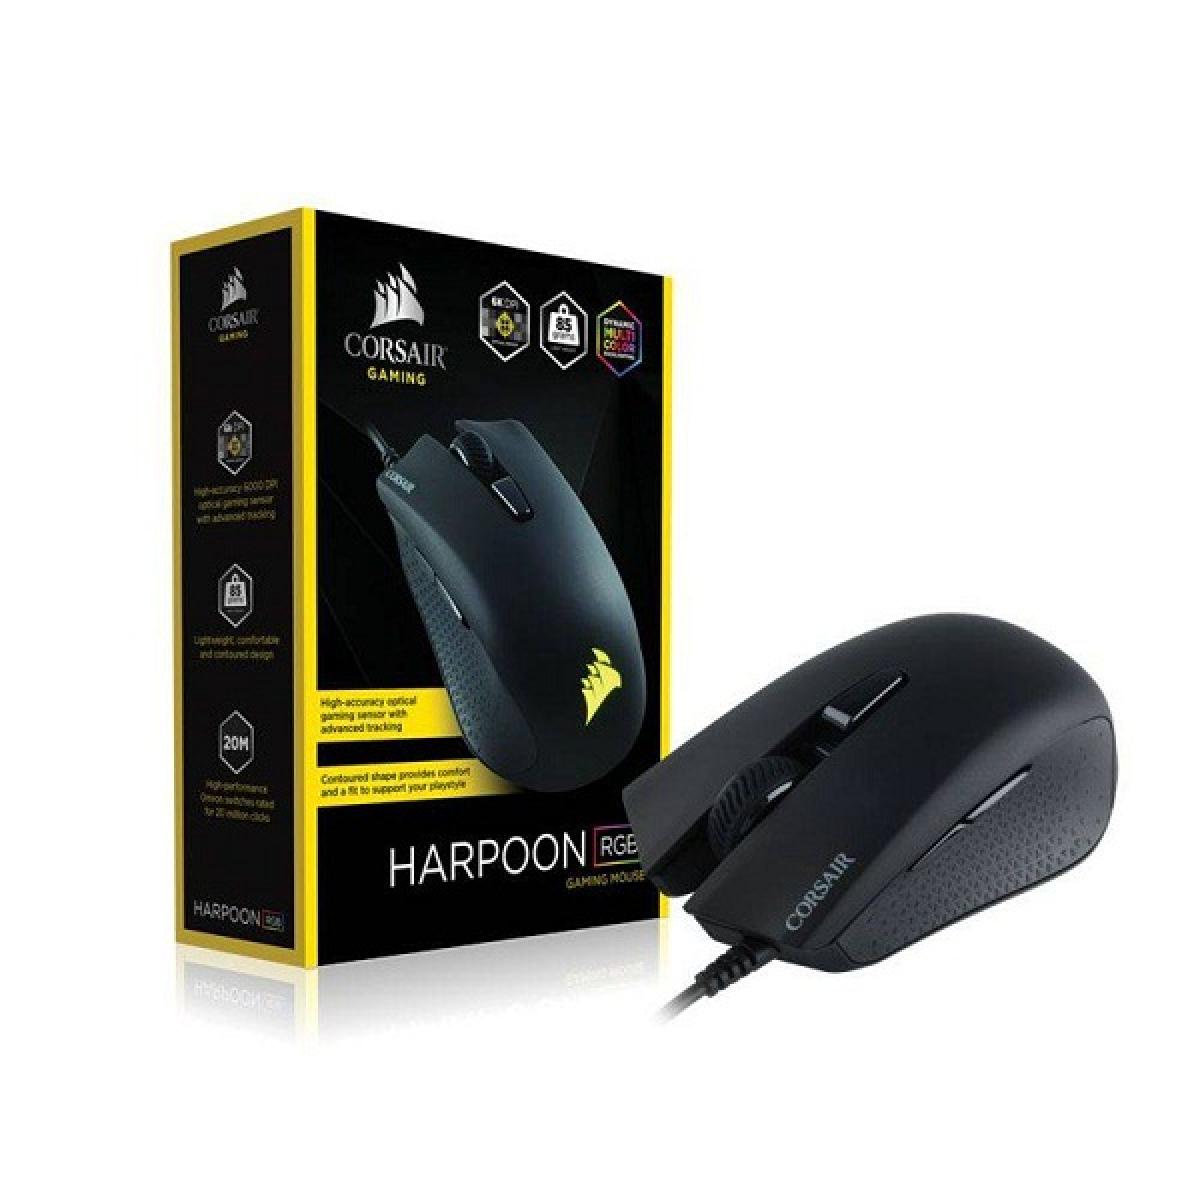 Corsair Harpoon RGB Black USB. Corsair Harpoon RGB Pro. Корсар гарпун РГБ про. Motor Mouse ти Джи.